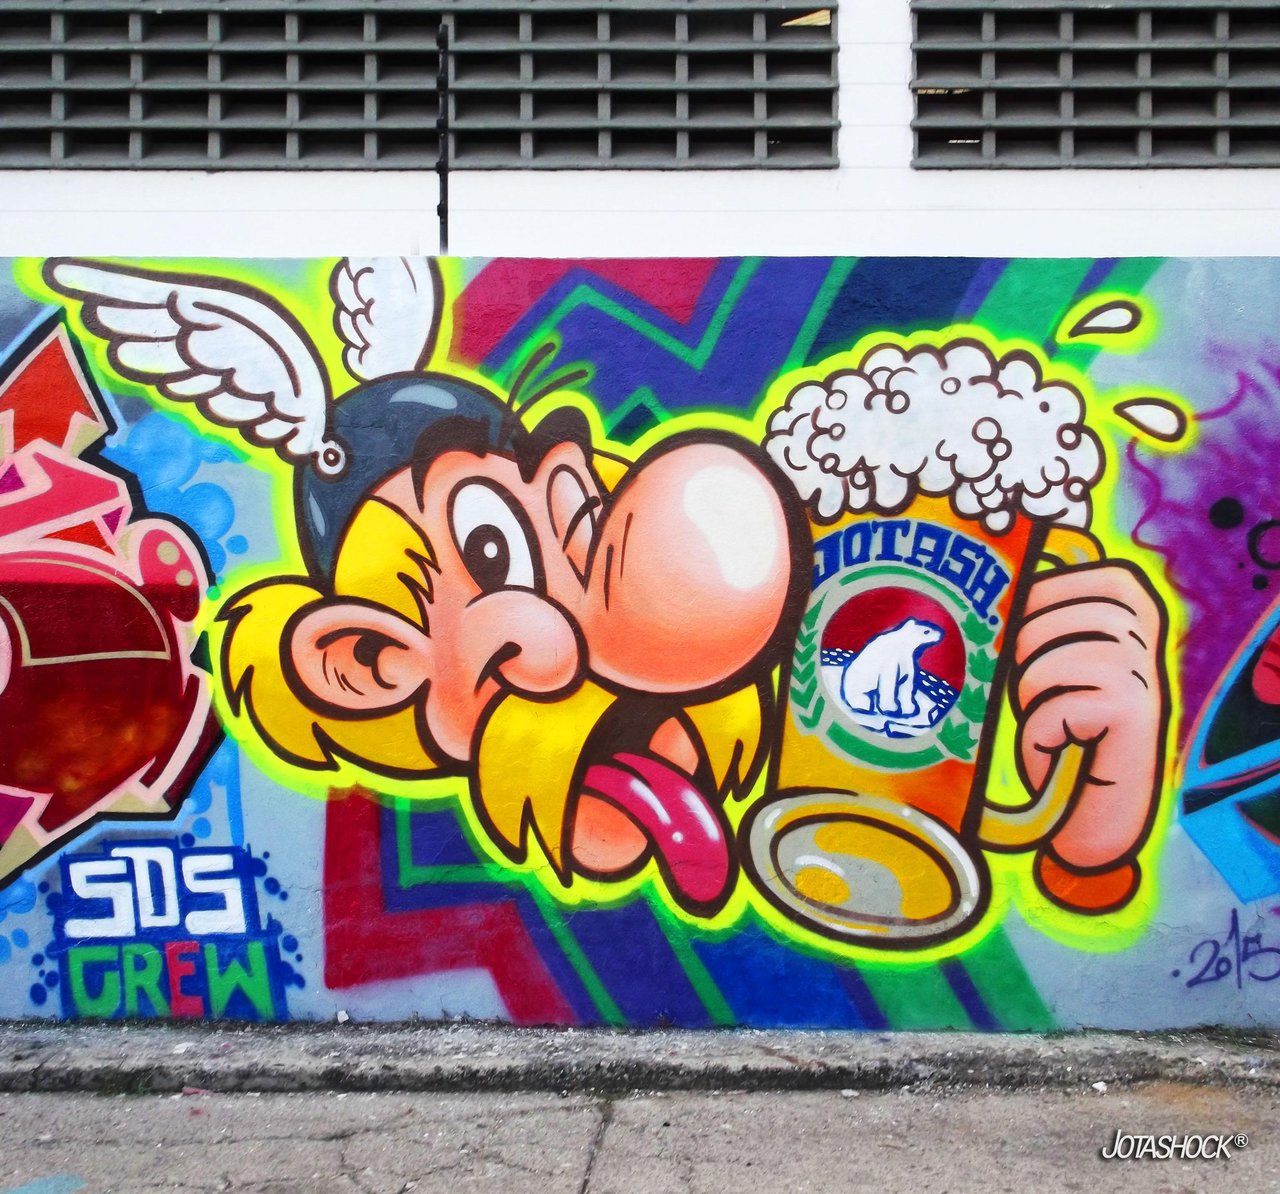 RT @jotashock: Graffiti ★ Life ★ Fun ★ Jotashock :)
#Astérix #jotashock #cerveza #graffiti #polar #streetart #arteurbano #graffiti http://t.co/JxGw9Yl03i